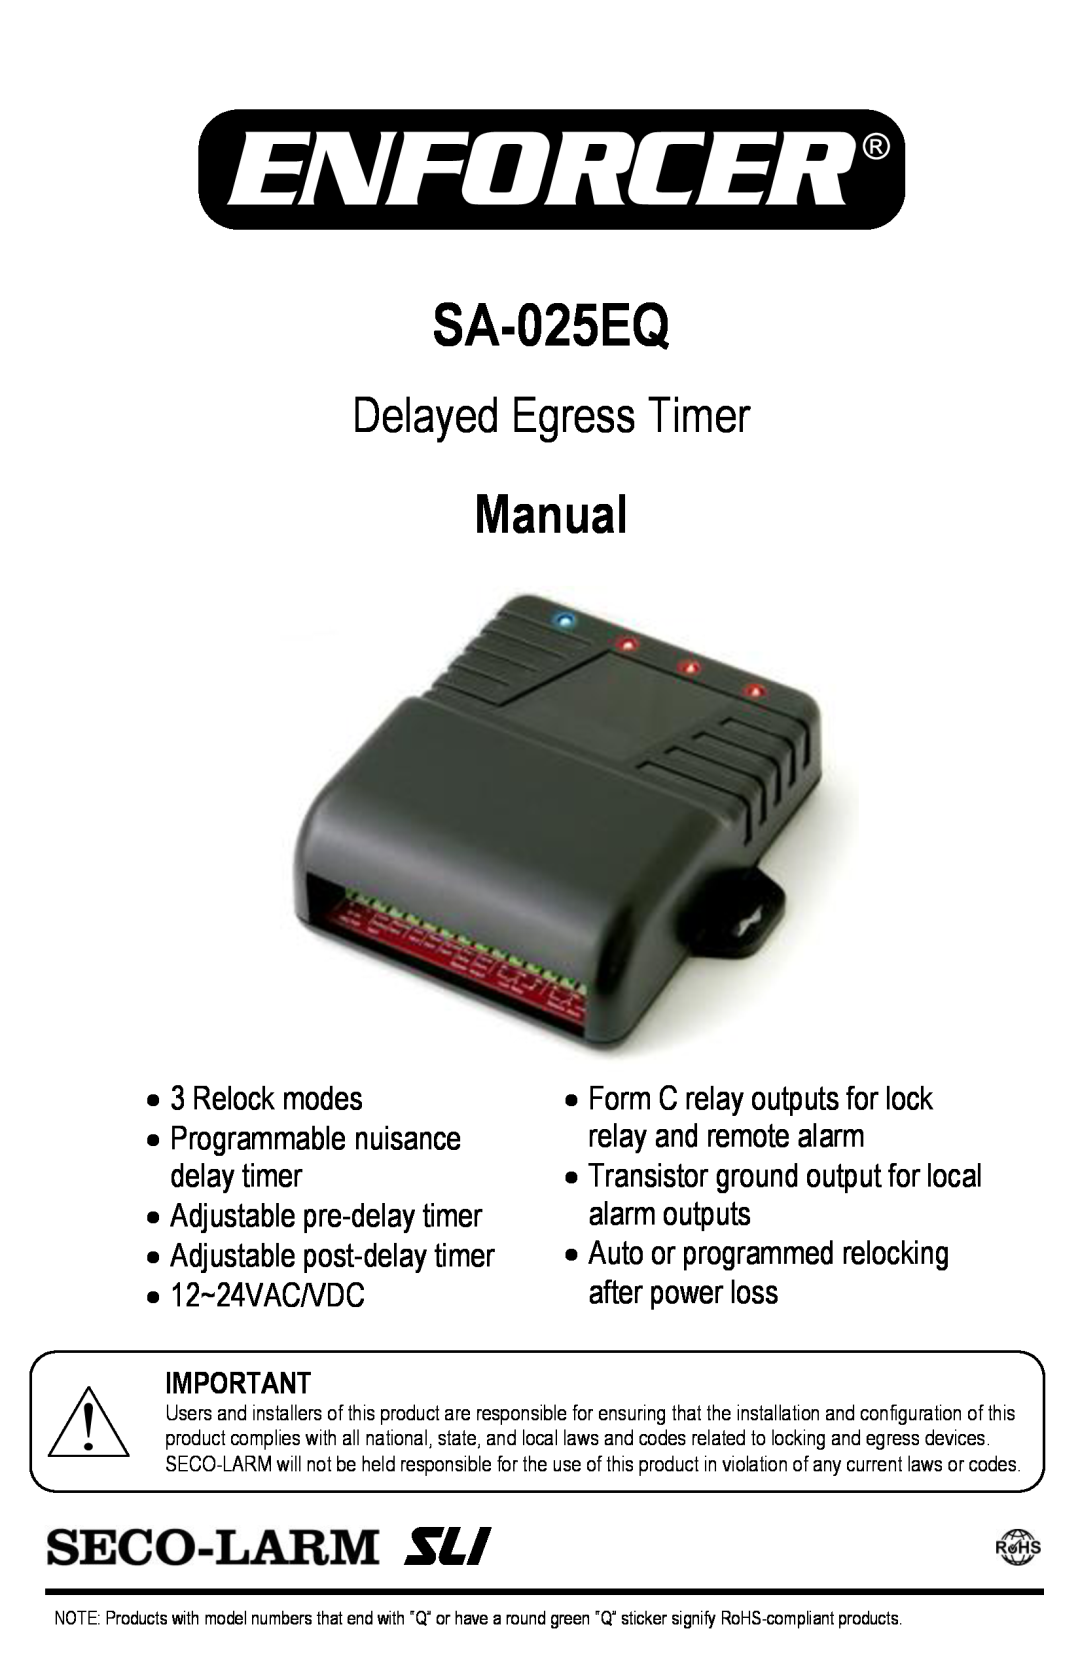 SECO-LARM USA SA-025EQ manual Manual, Delayed Egress Timer 